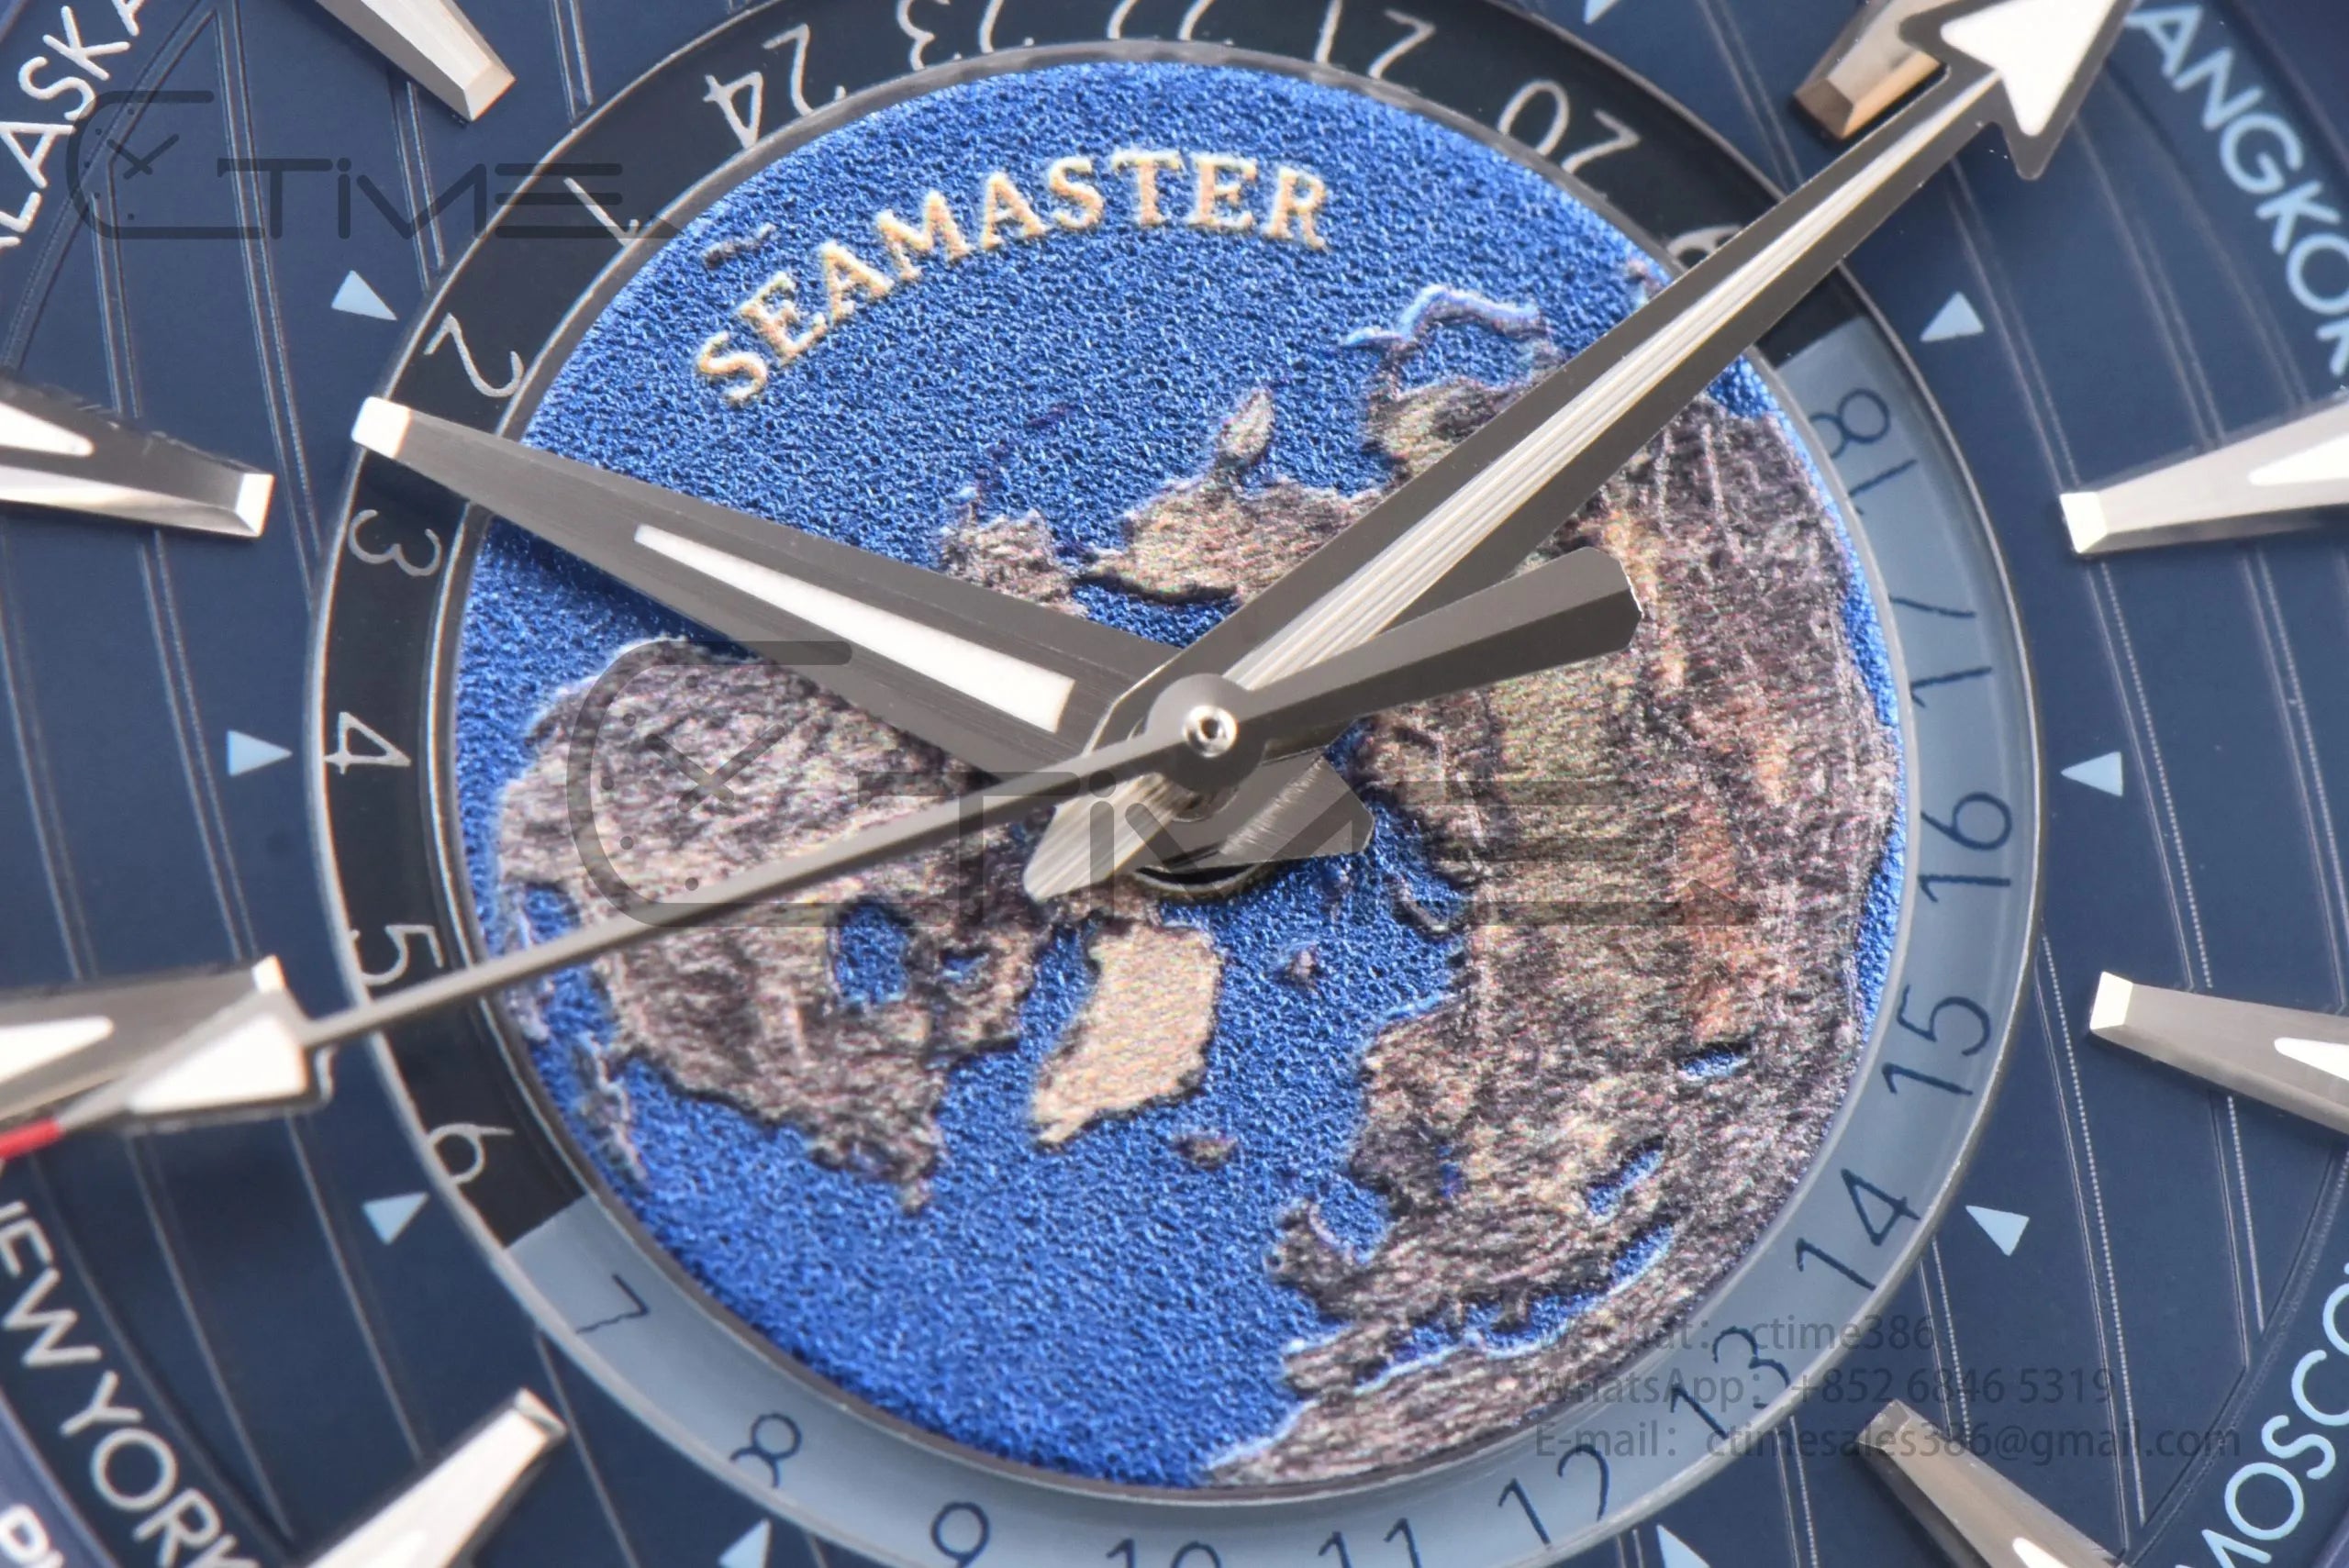 Reloj Omega Seamaster Aqua Terra 150m para hombre 43mm GMT 220.12.43.22.03.001